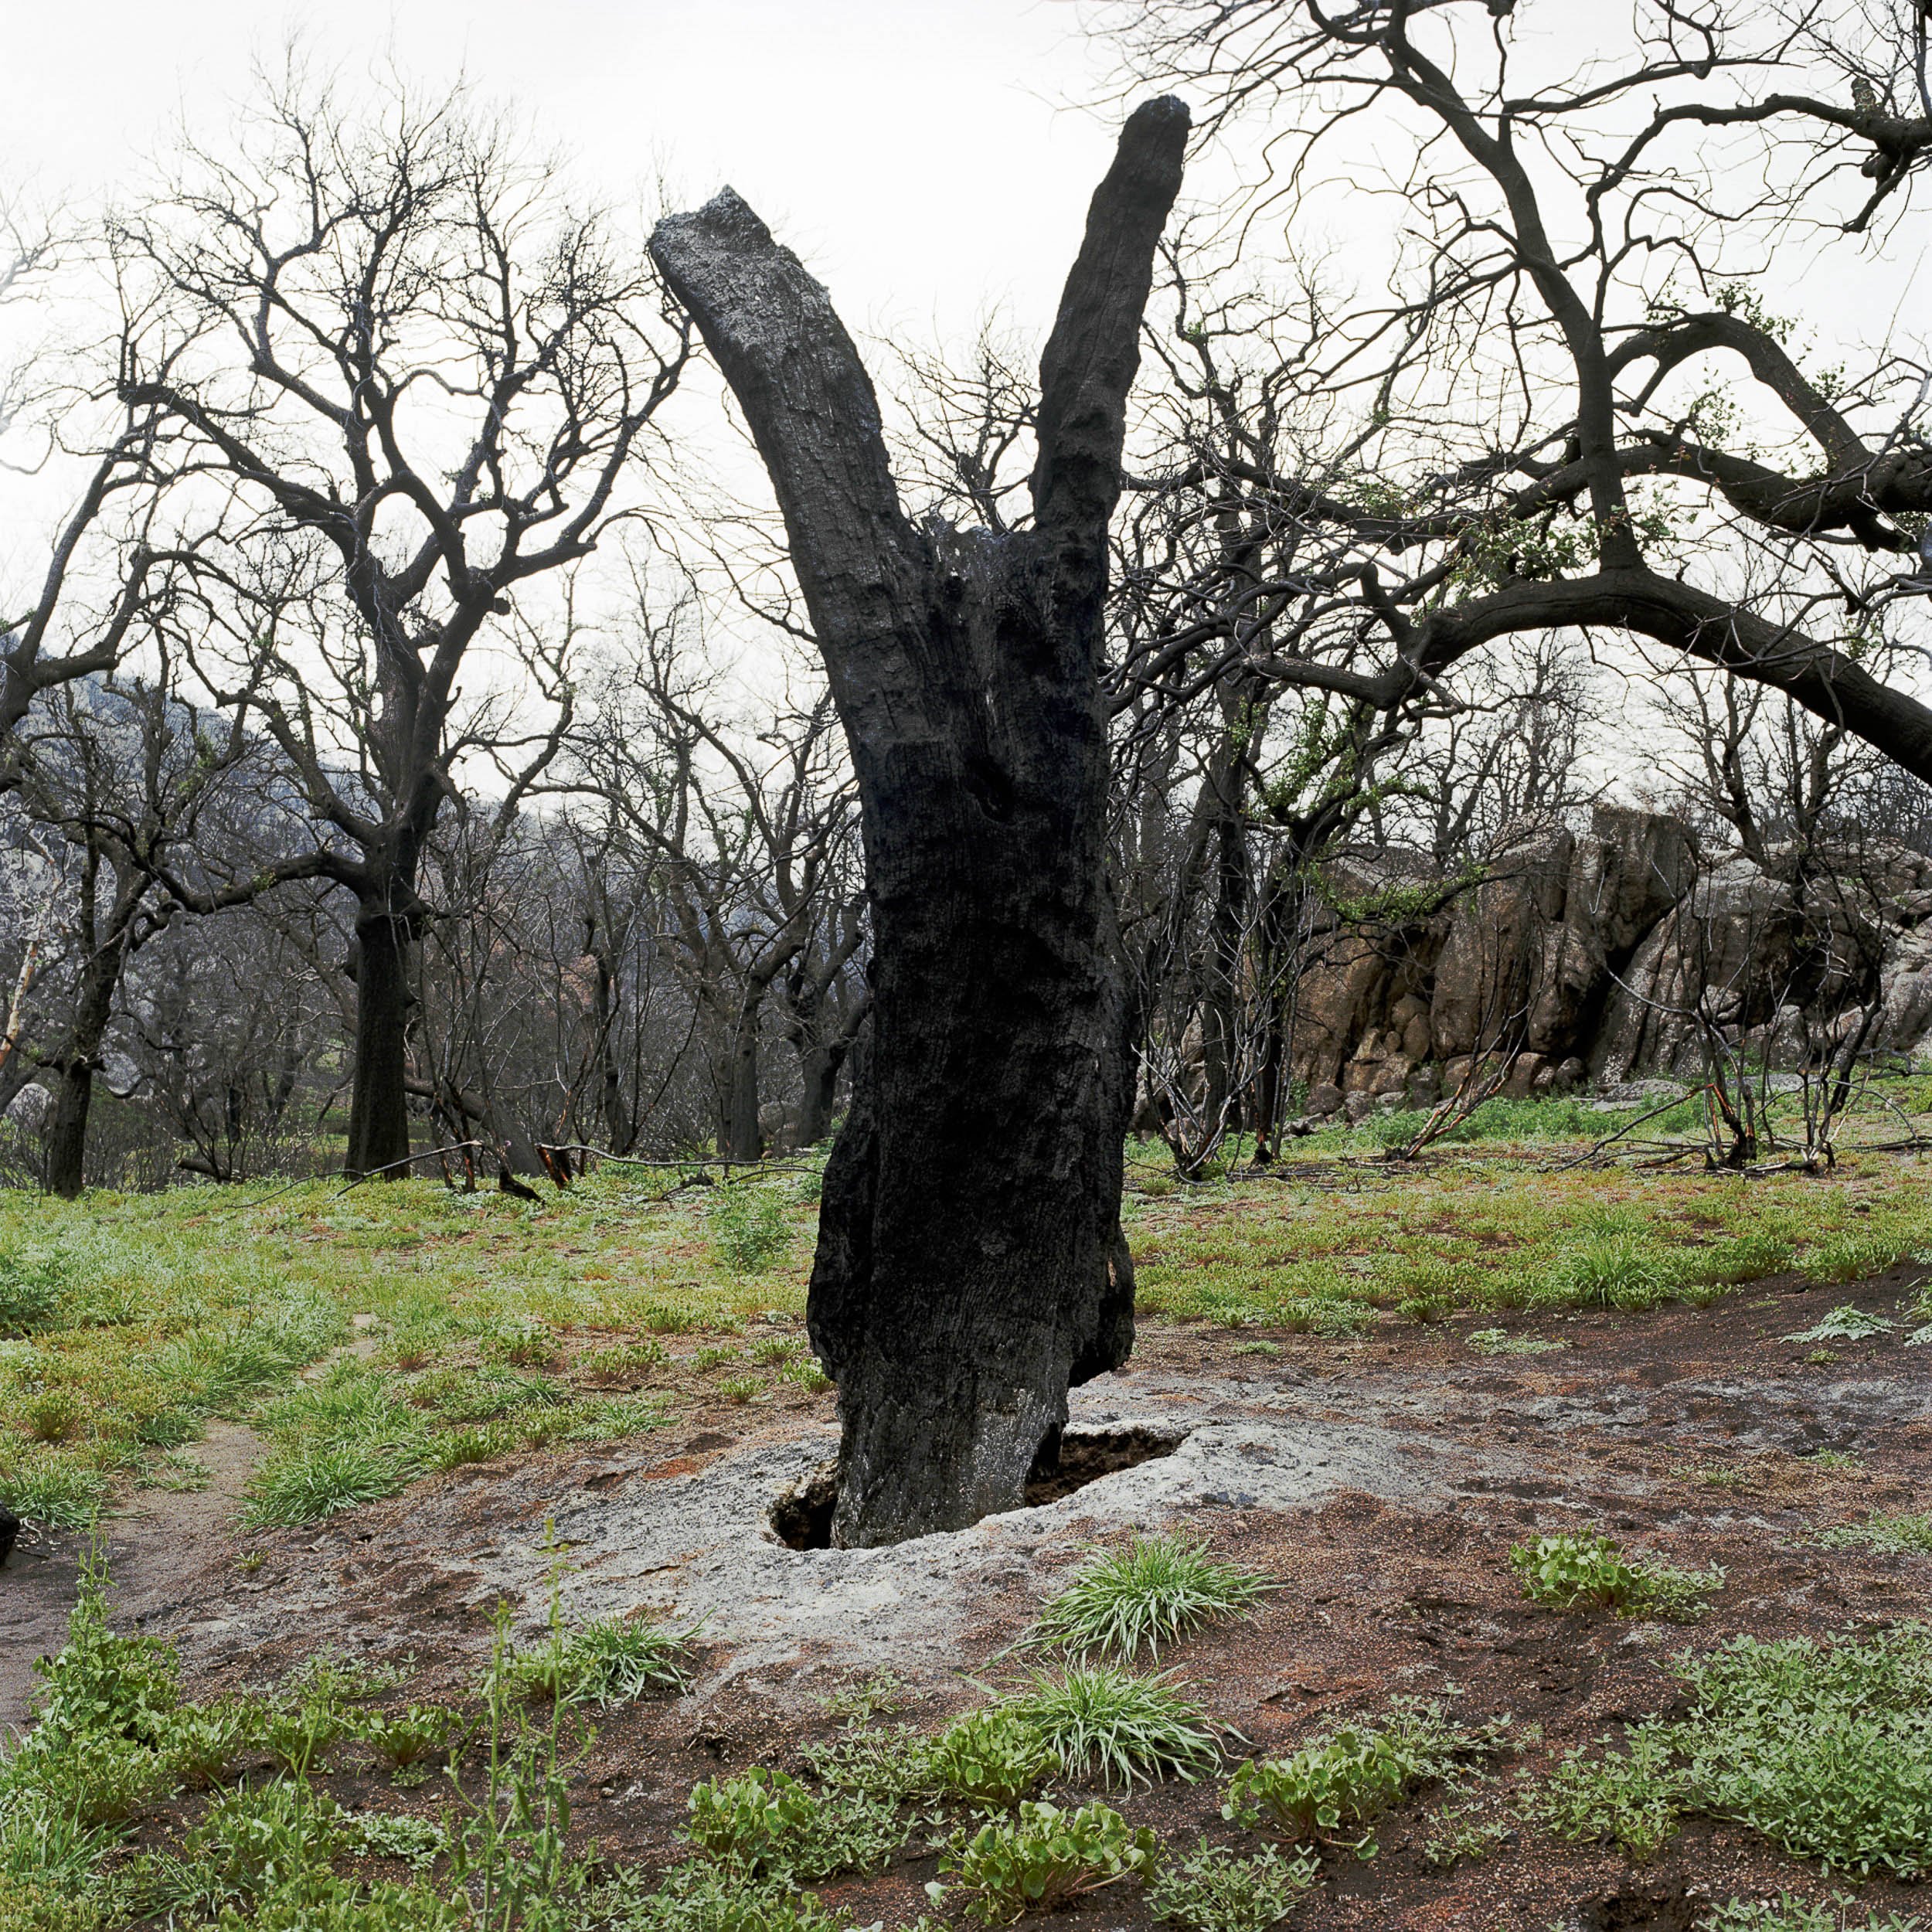   Burnt Live Oak #1, Cuyamaca Rancho Wilderness  